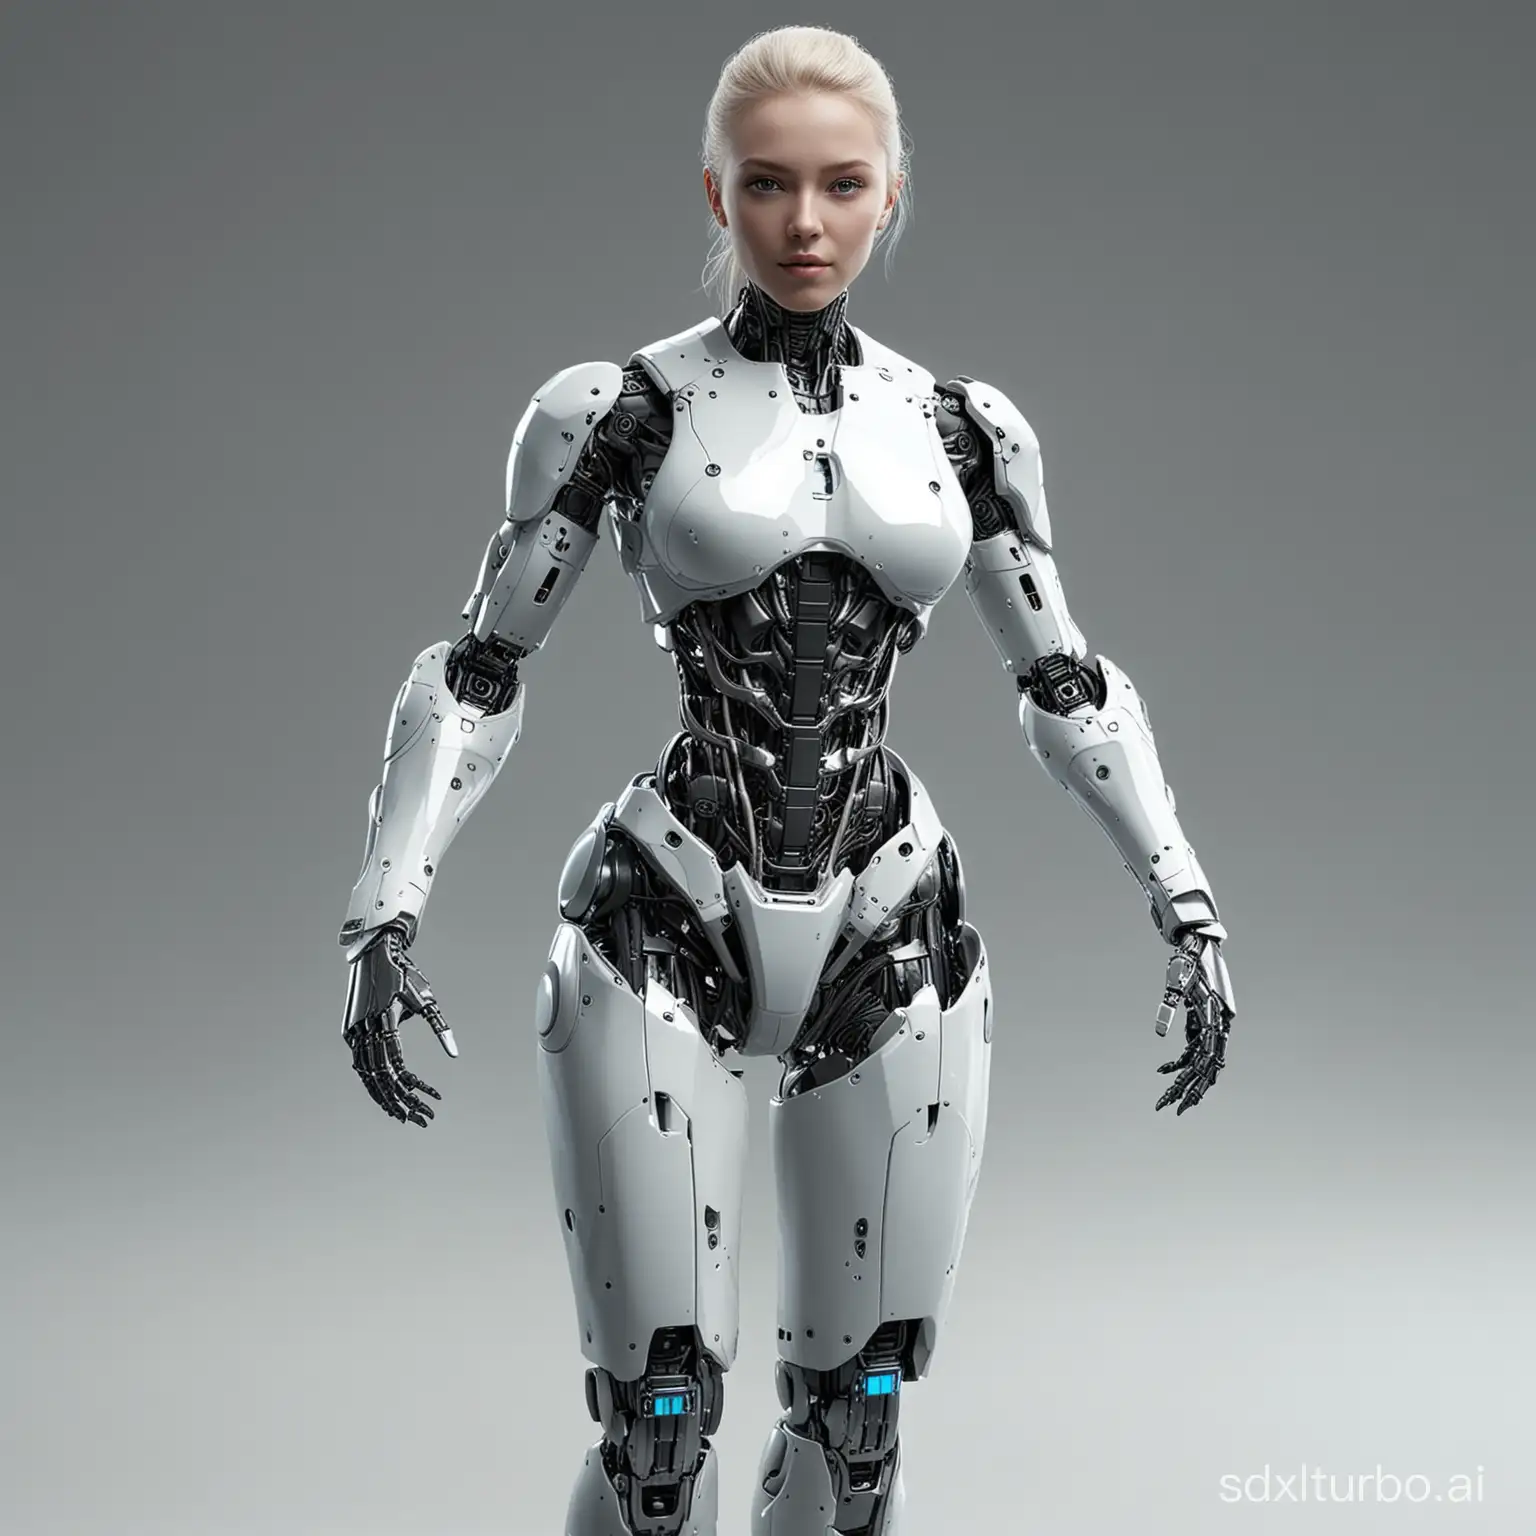 Dynamic-Futuristic-Female-Humanoid-Robot-in-Fullbody-Image